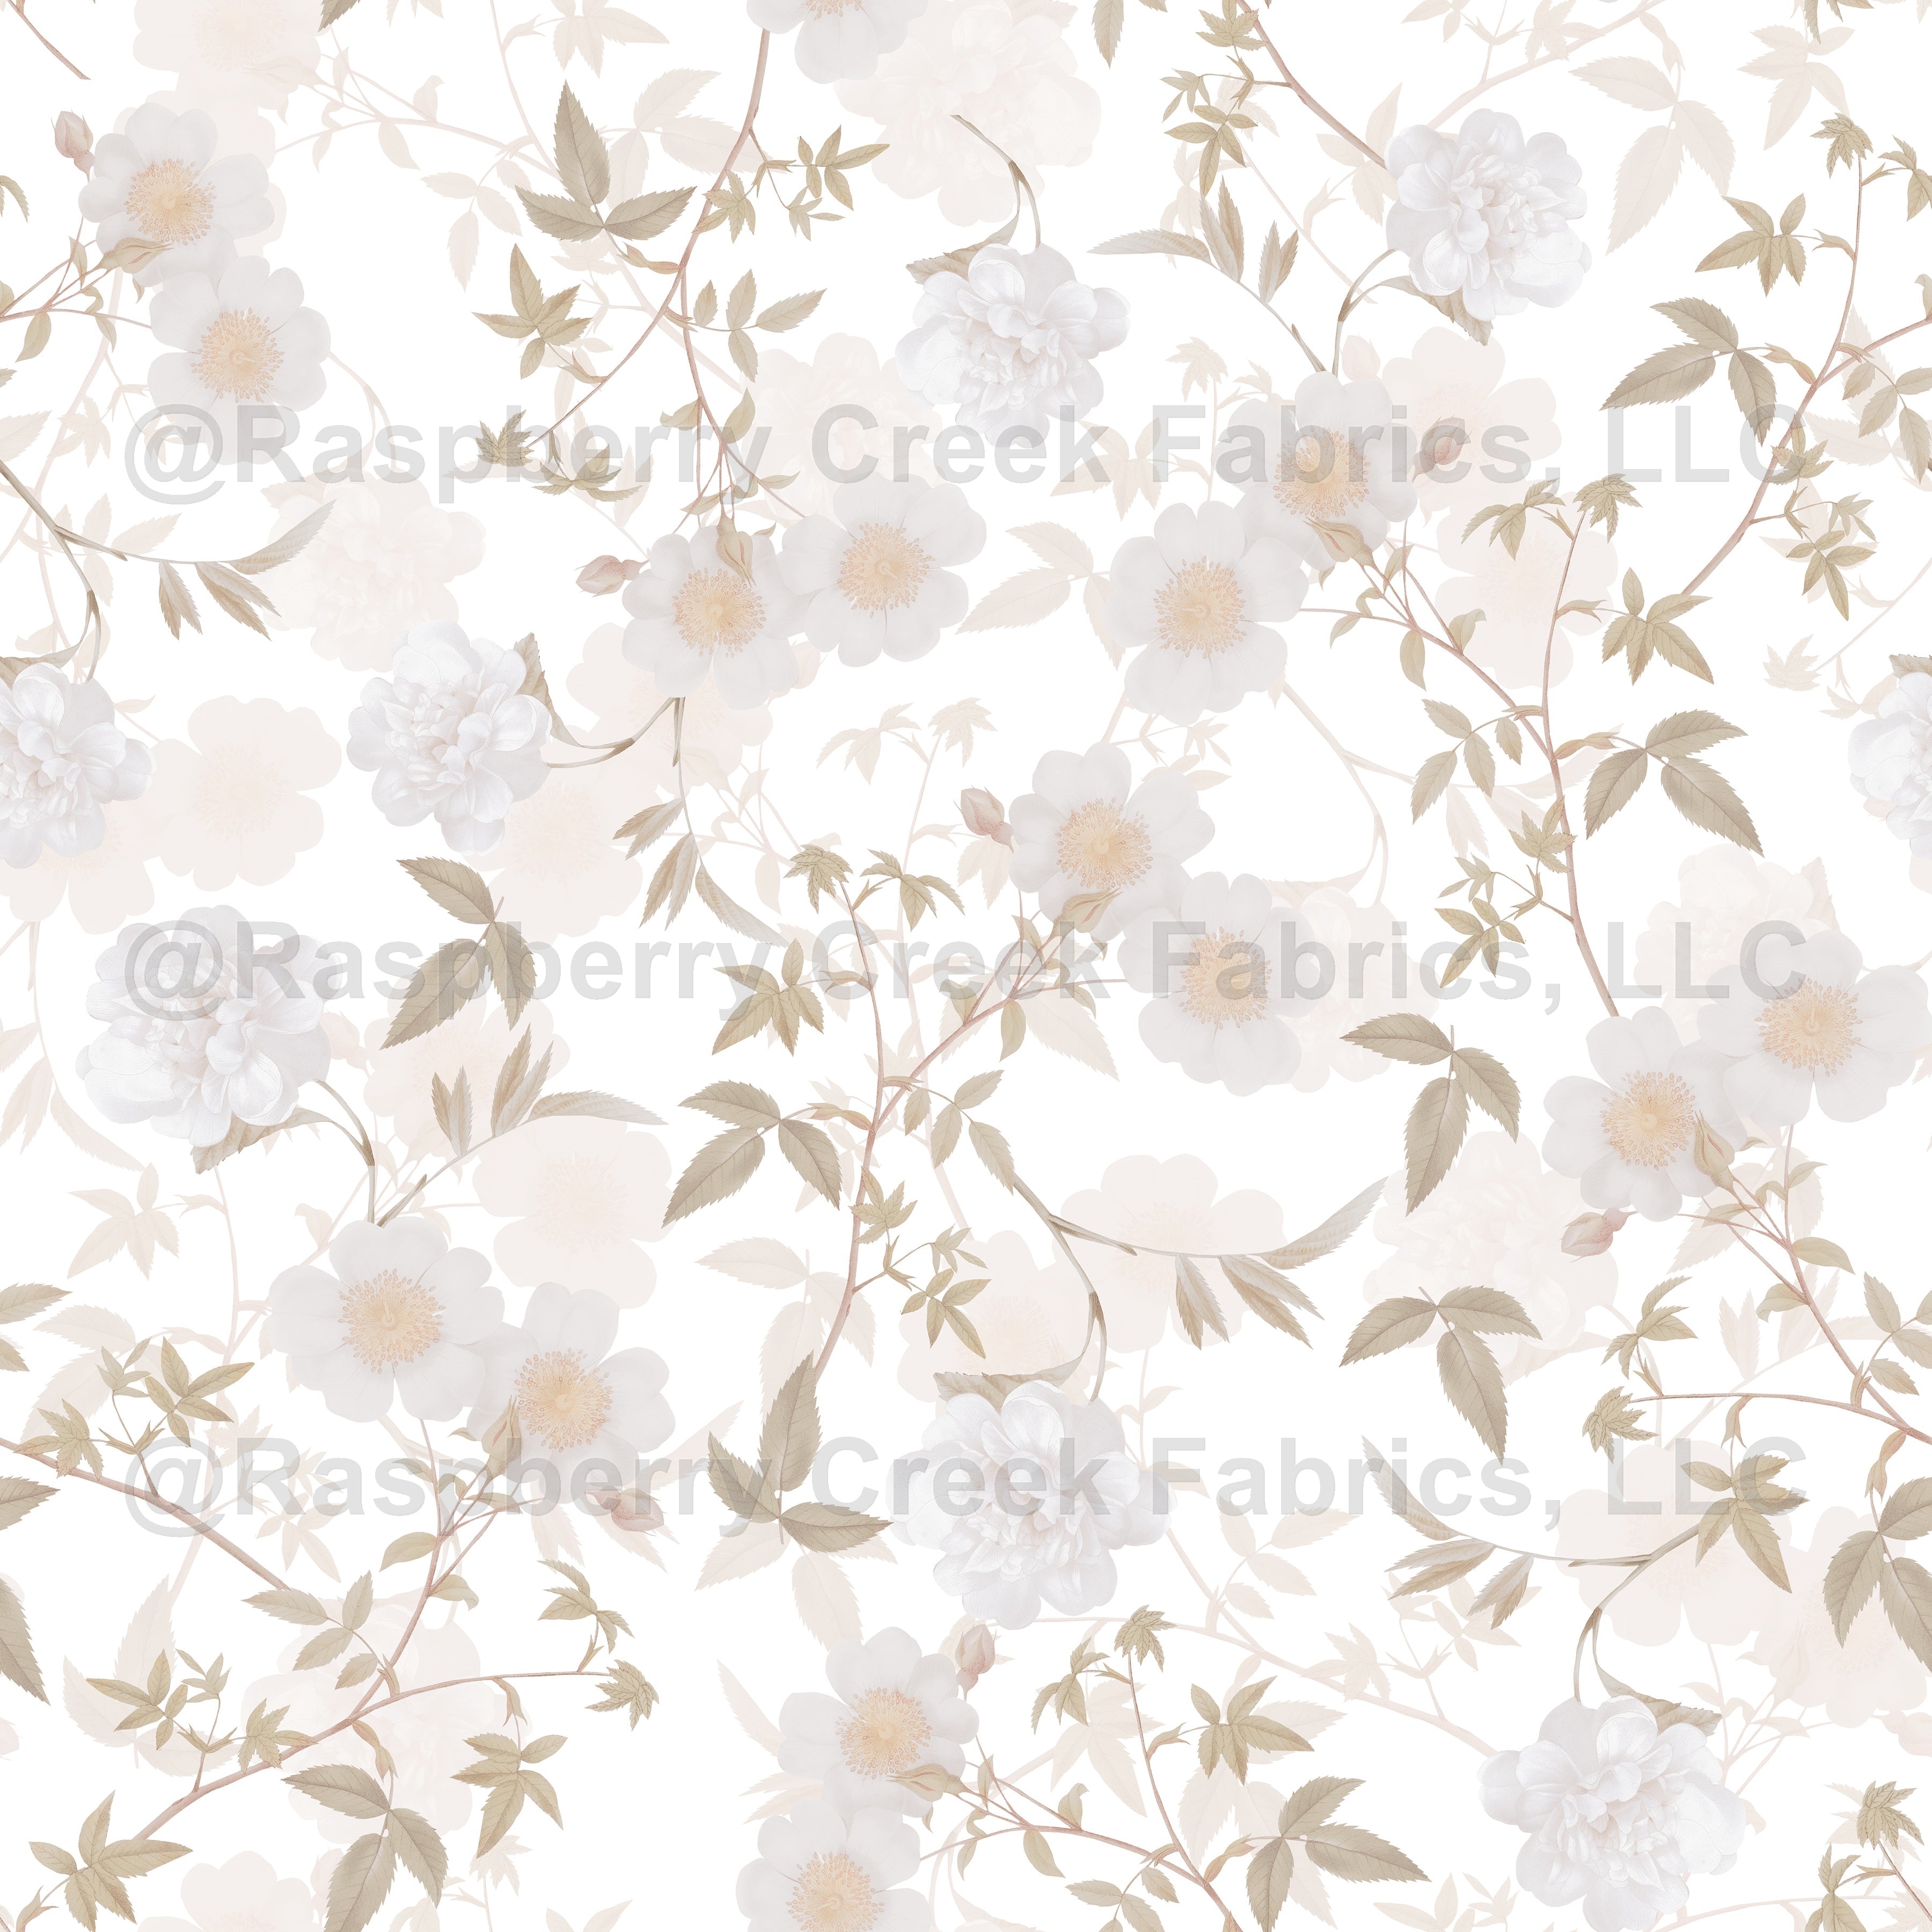 Vintage  Redouté  Roses White Wallpaper, Raspberry Creek Fabrics, watermarked